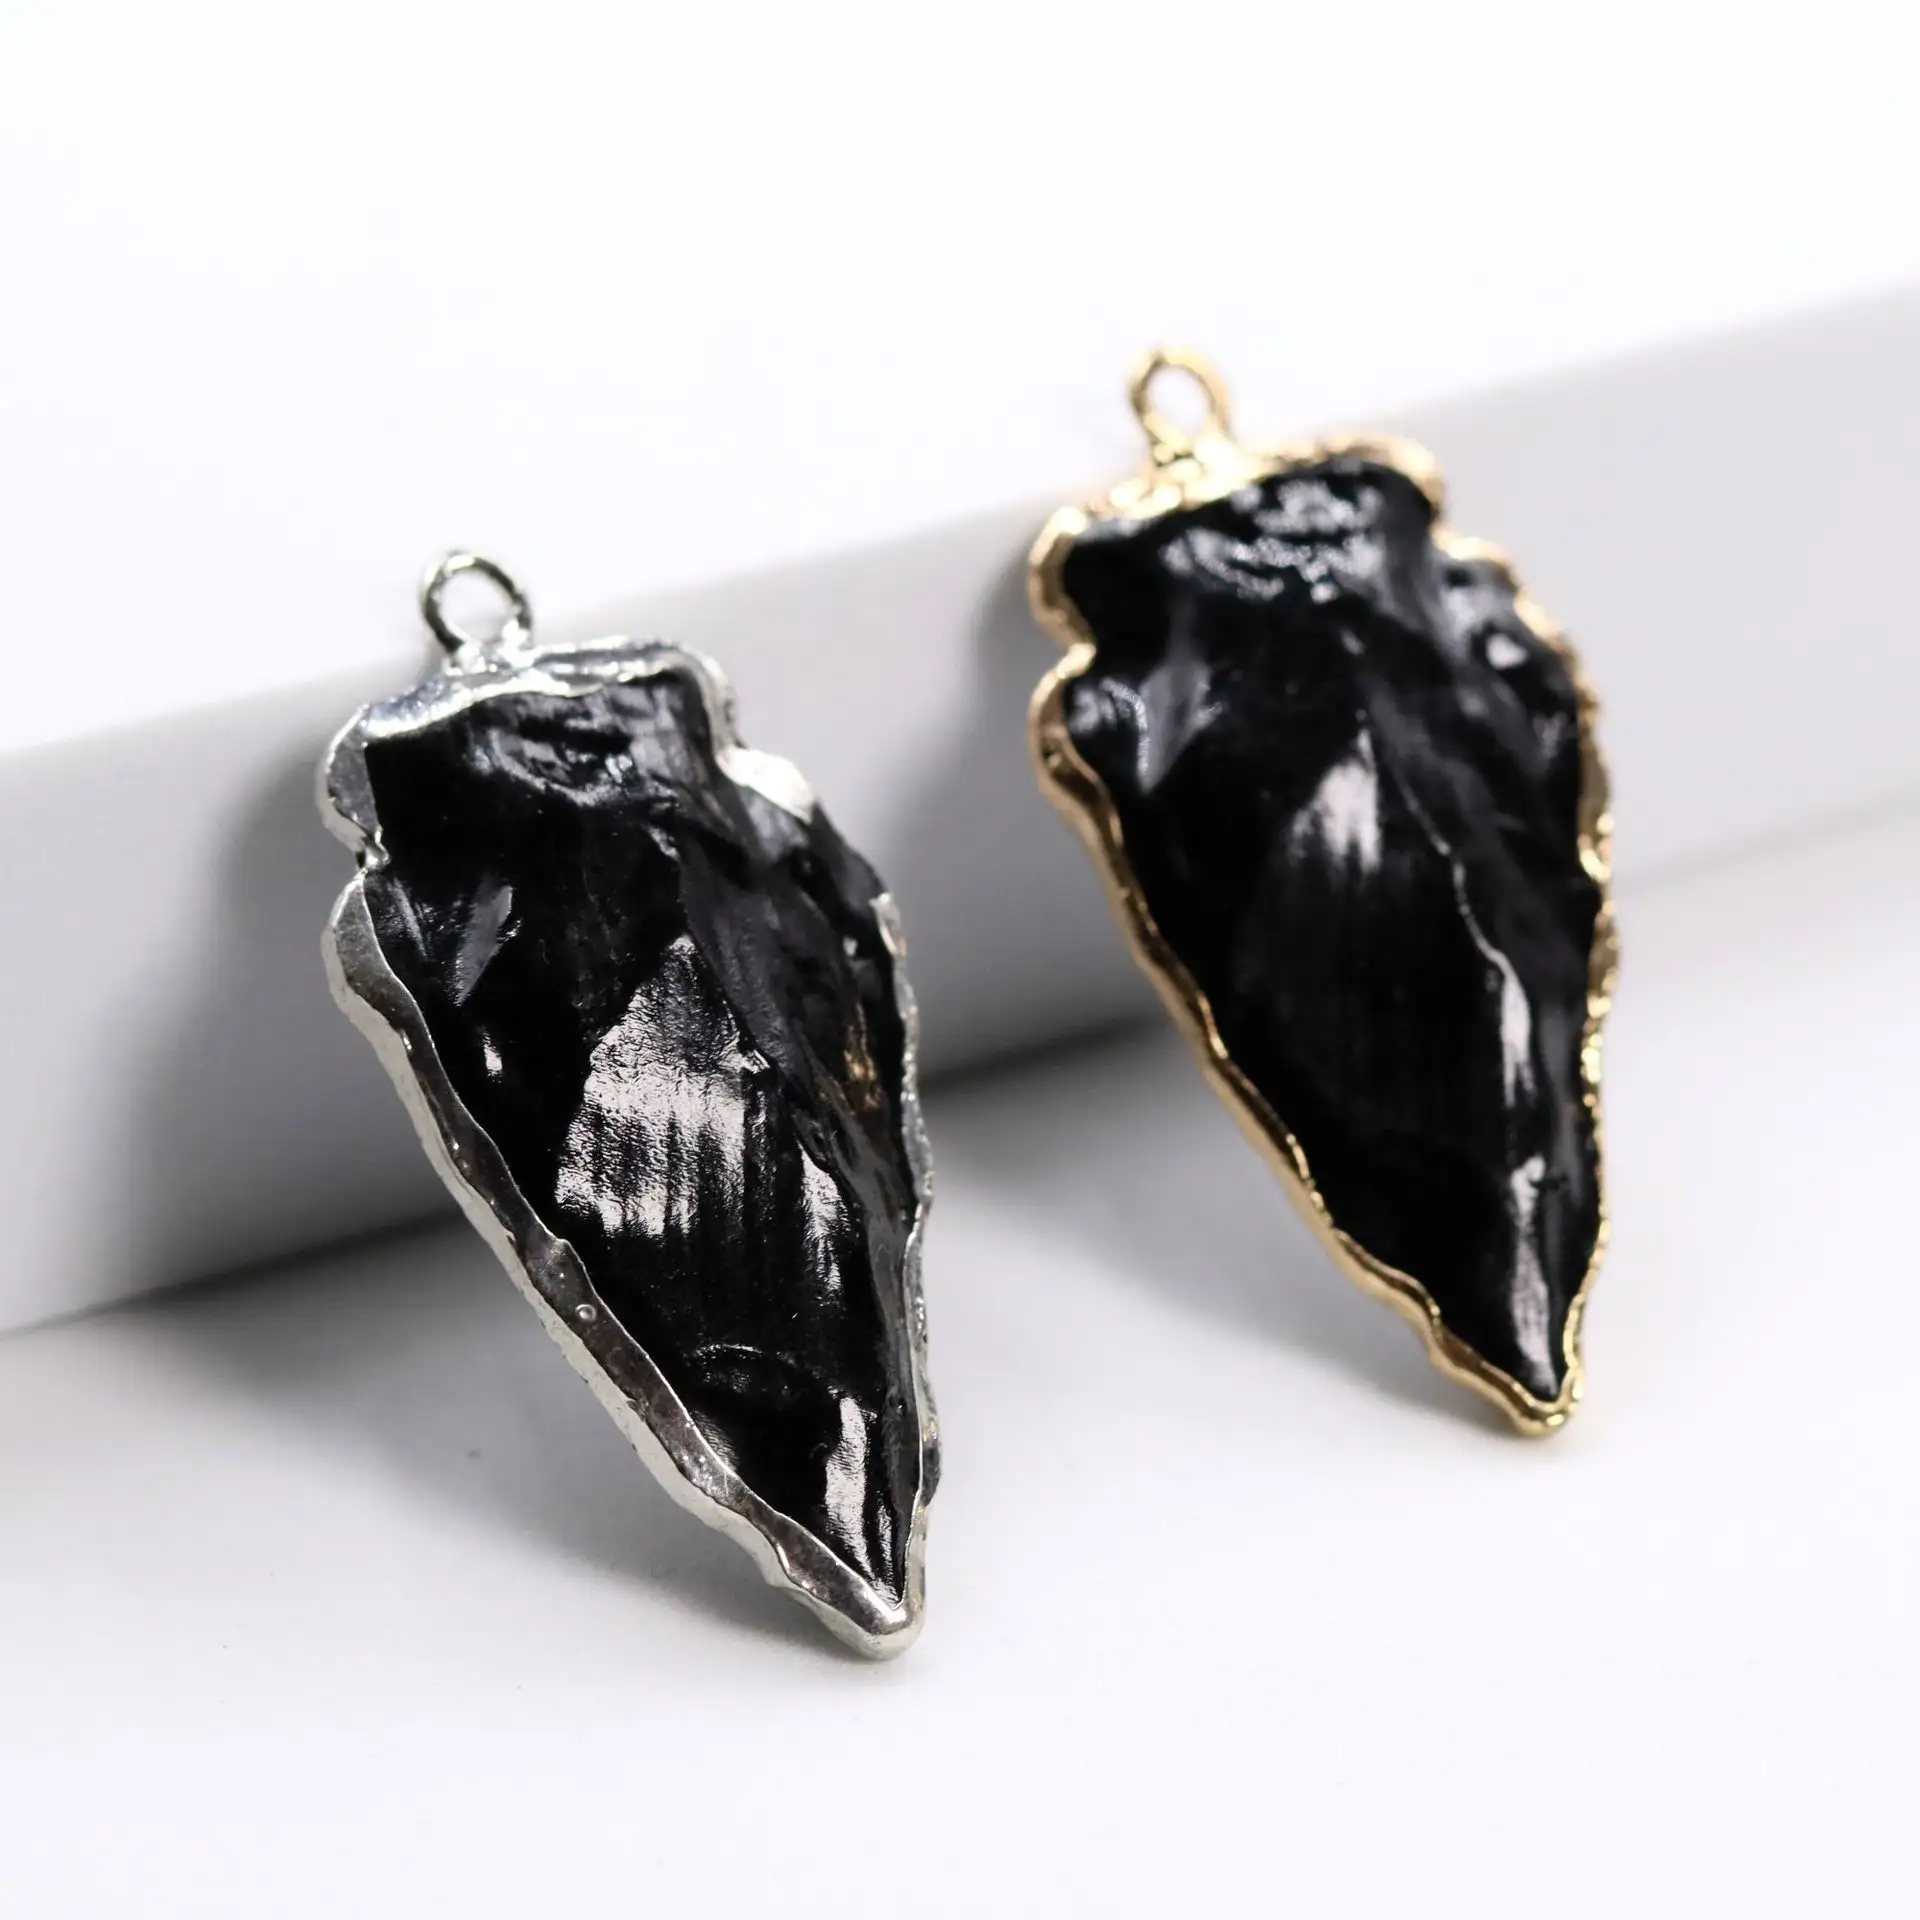 Rock Raw Black Obsidian Pendants Charm Men Jewelry Arrowhead Healing Point Rough Natural Stone Pendant Necklaces